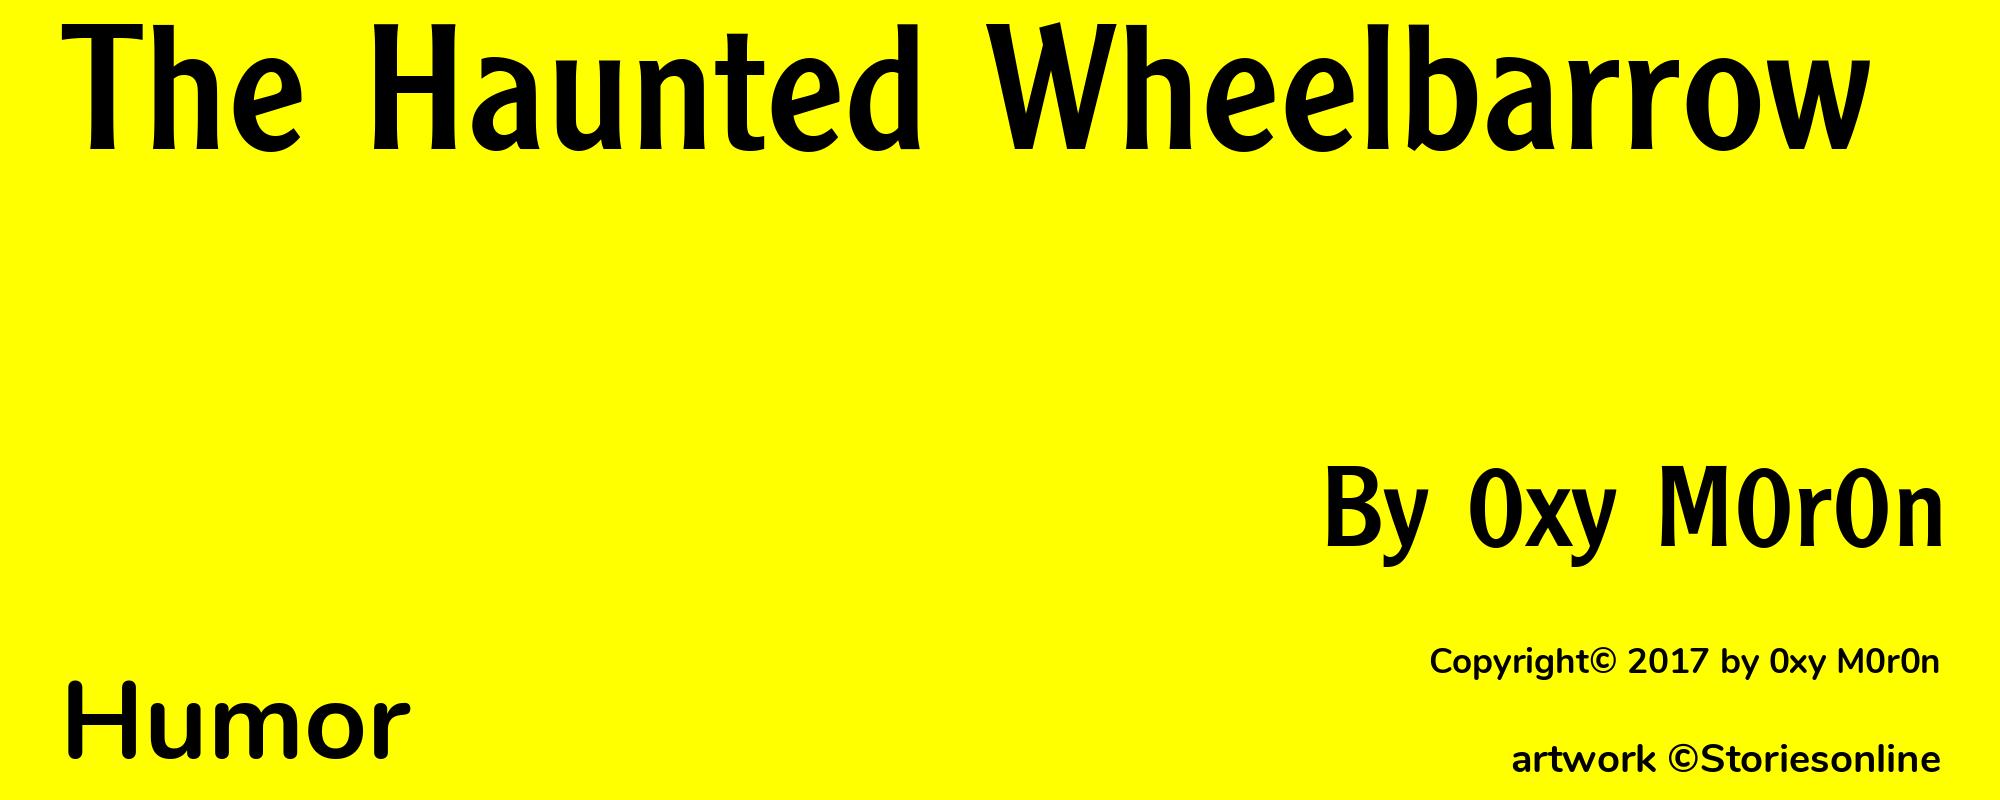 The Haunted Wheelbarrow - Cover